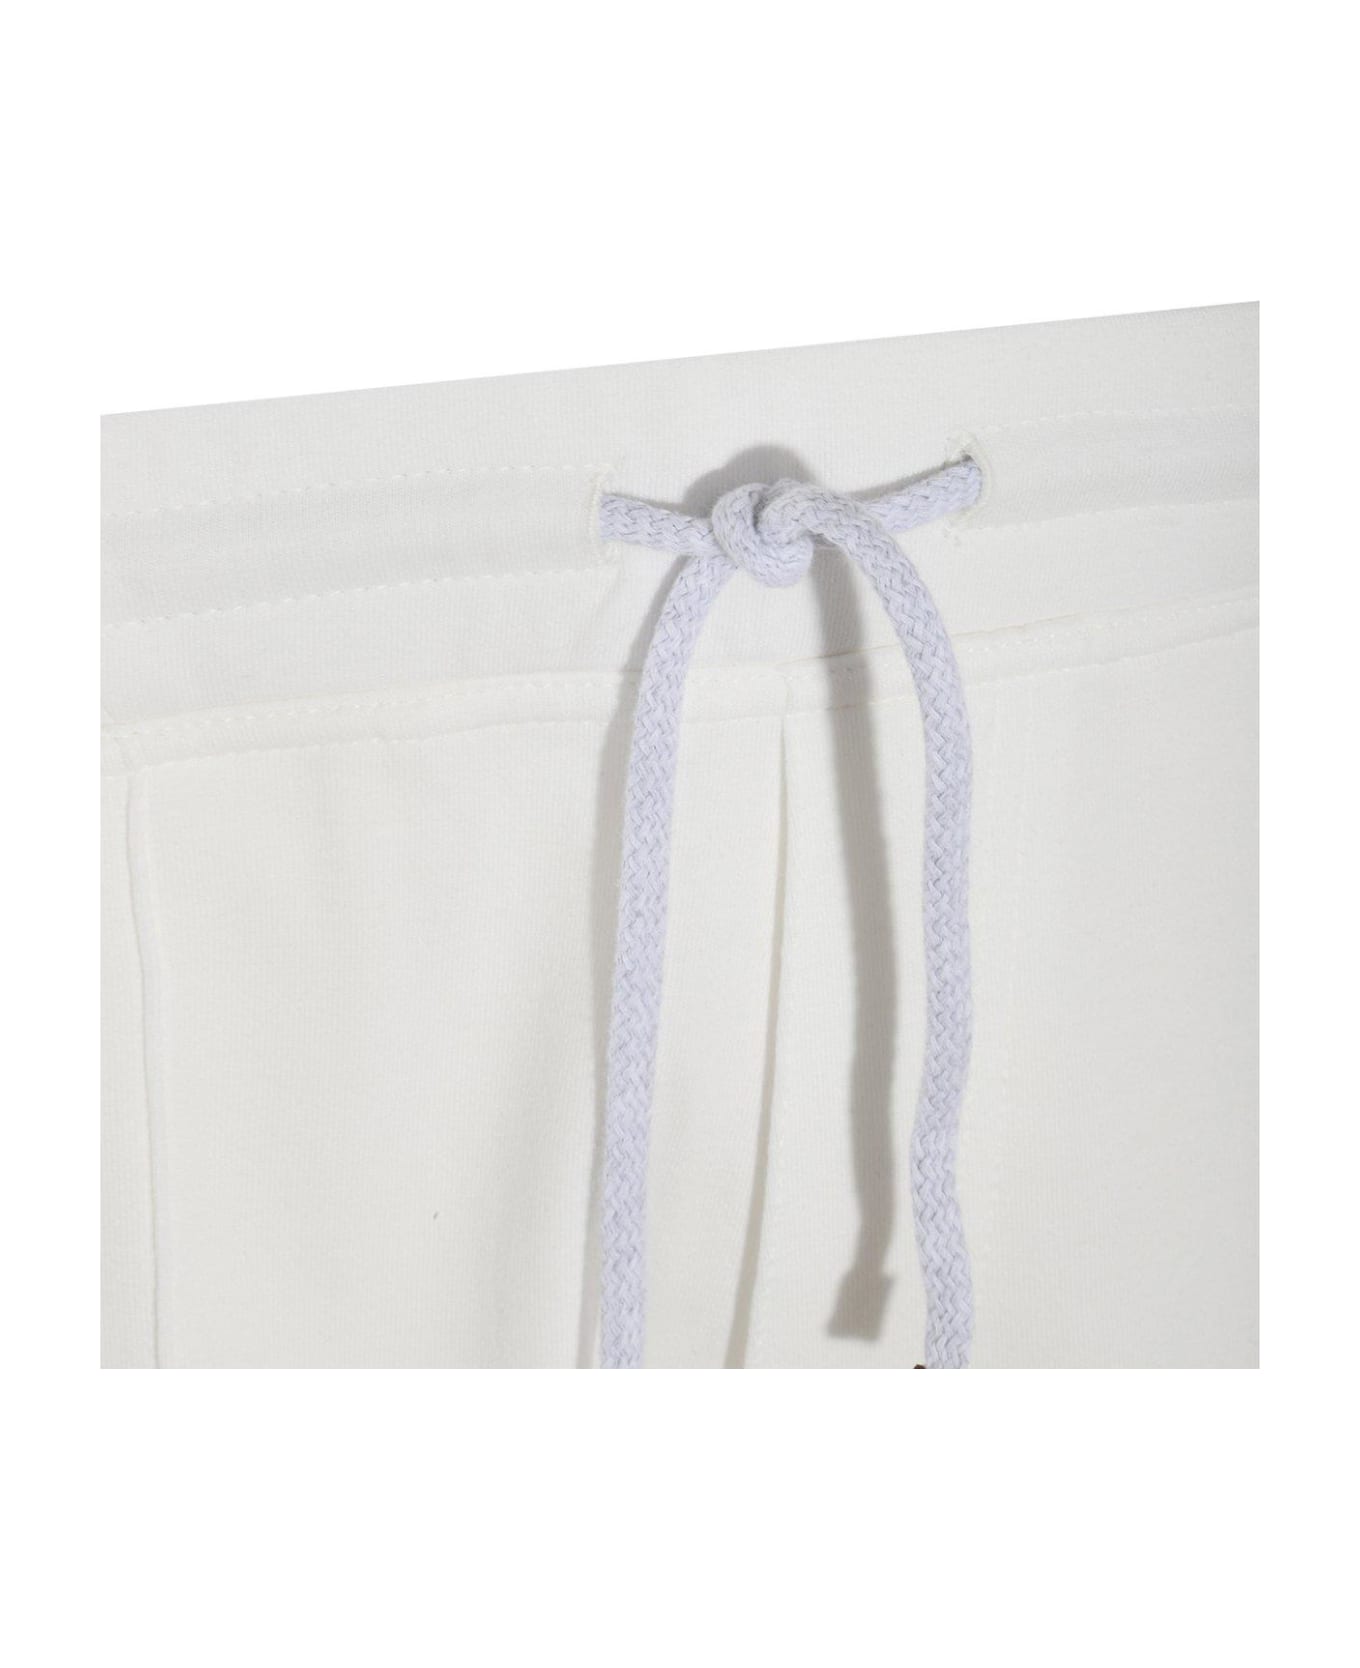 Brunello Cucinelli Straight-leg Drawstring Track Pants - White